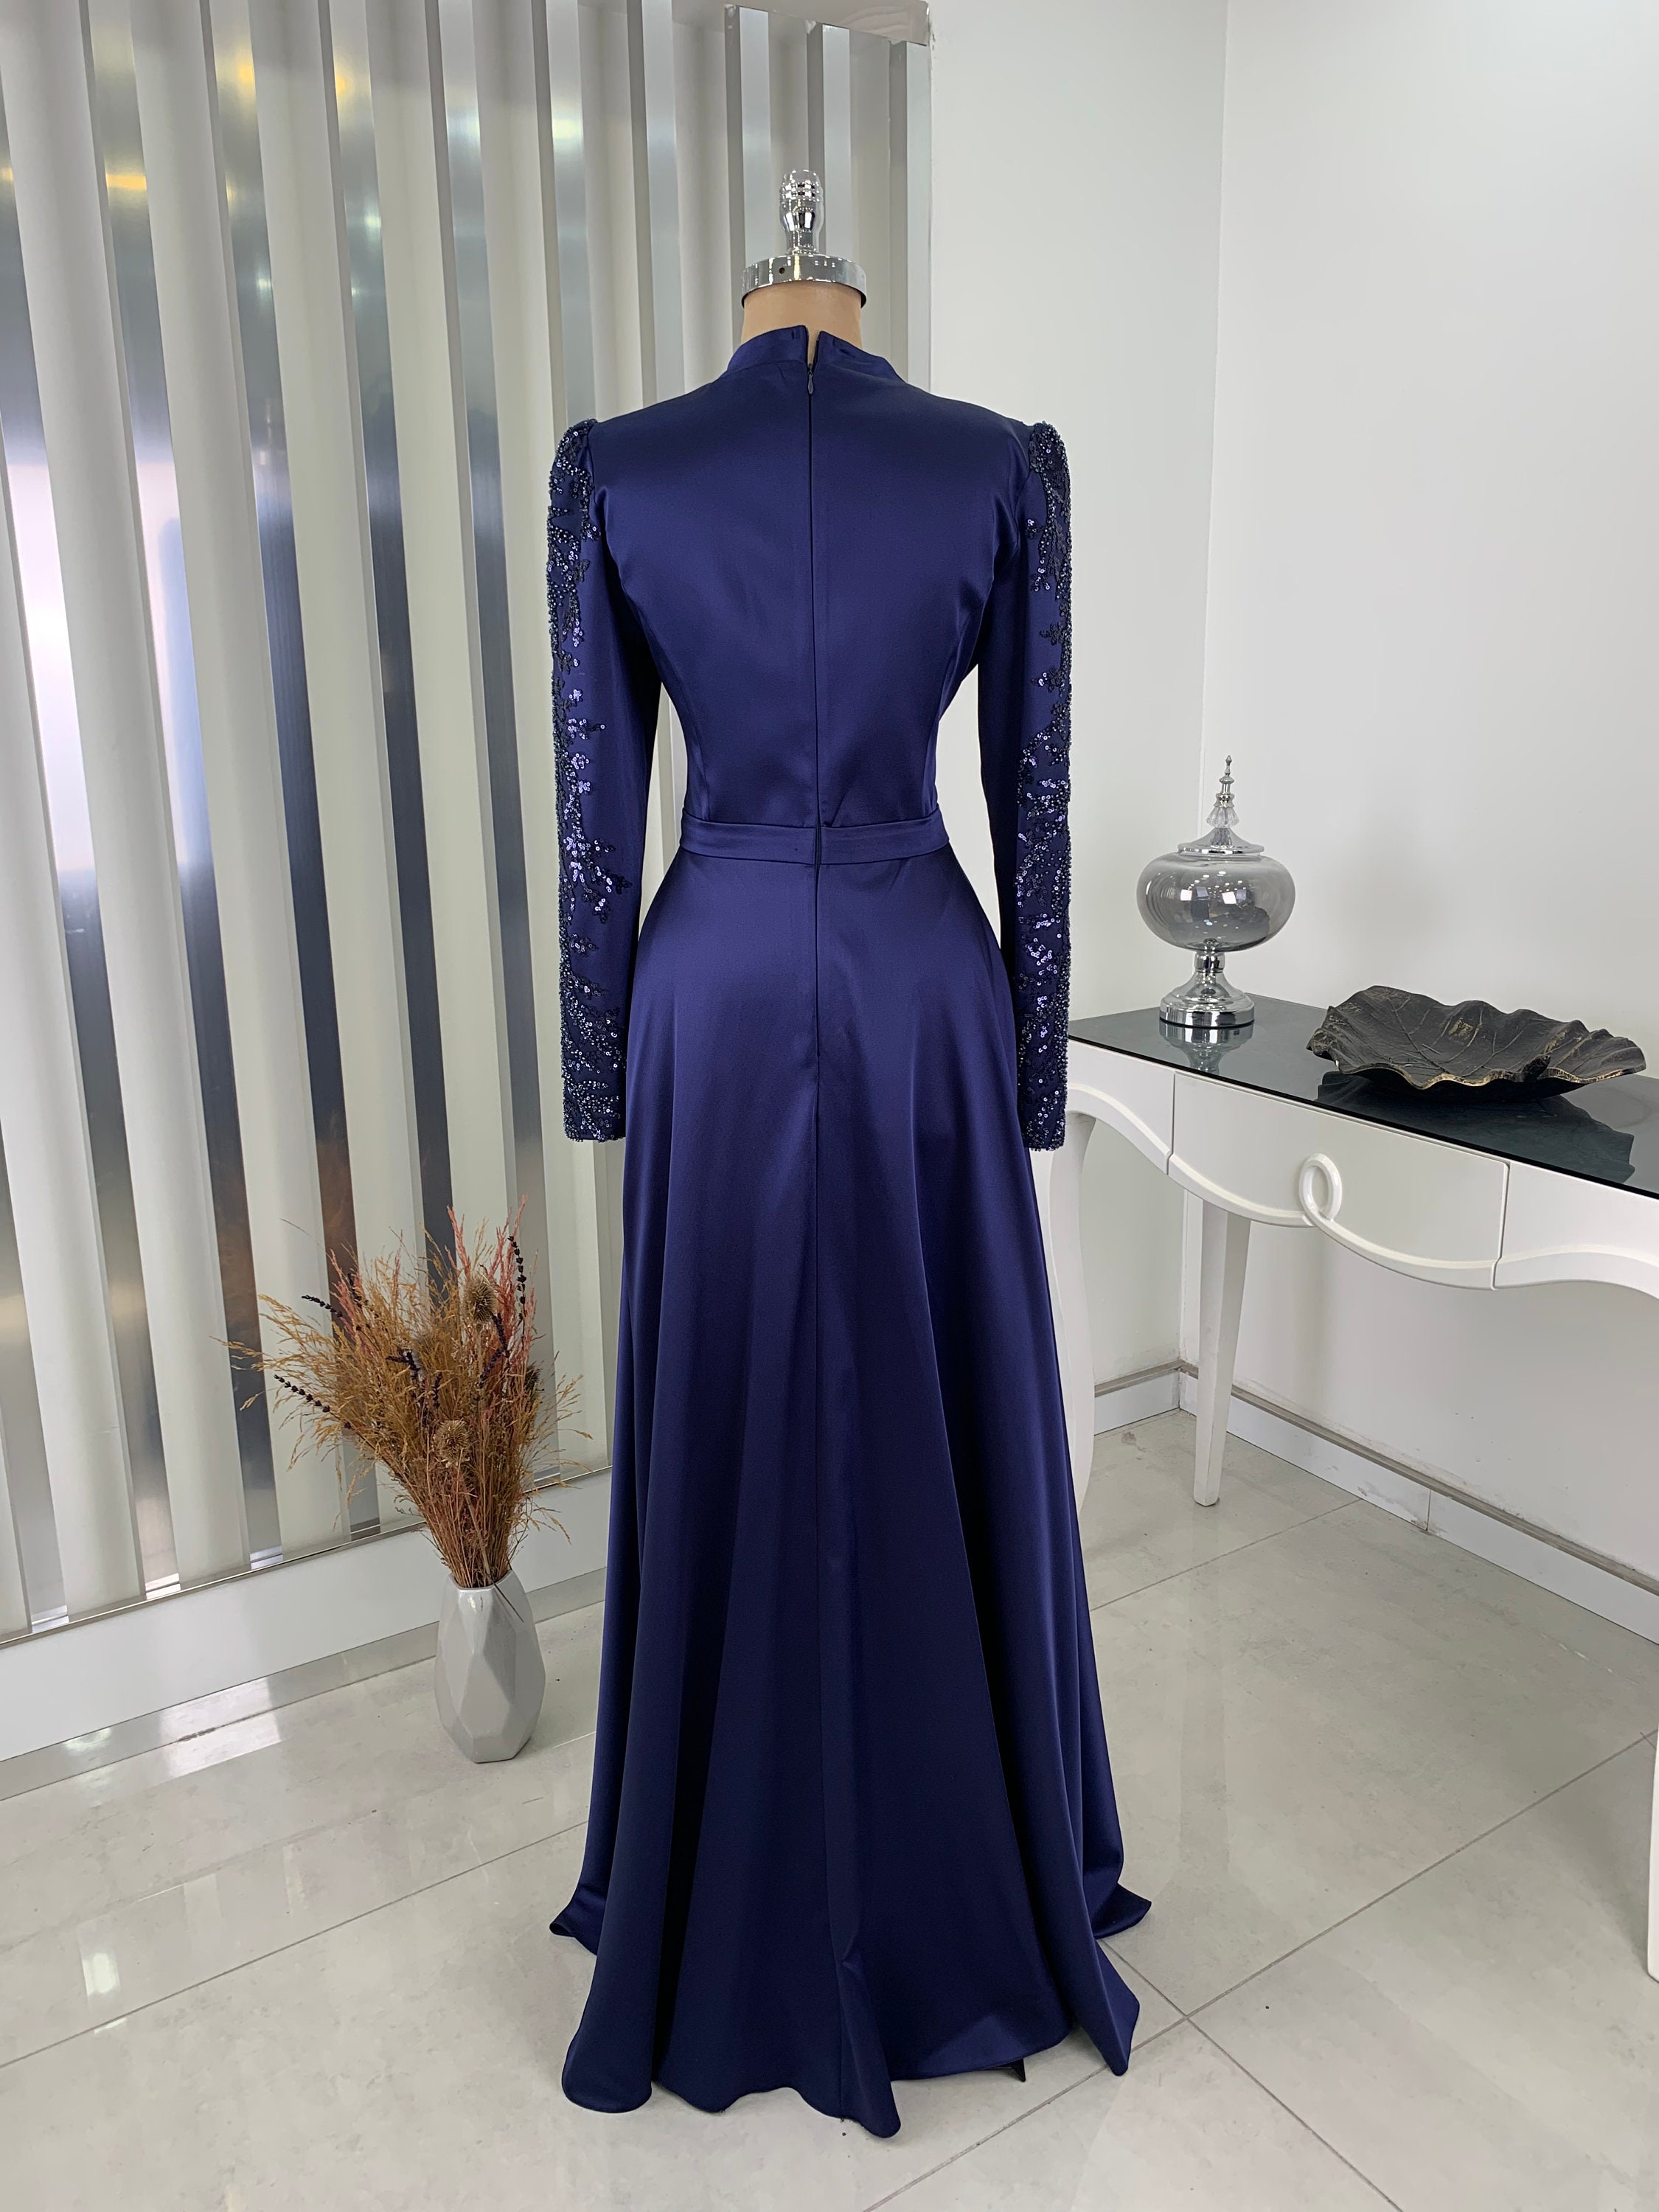 Exclusive Satin / Wedding Dress / Prom Dress / Islamic Cloth / - Etsy UK